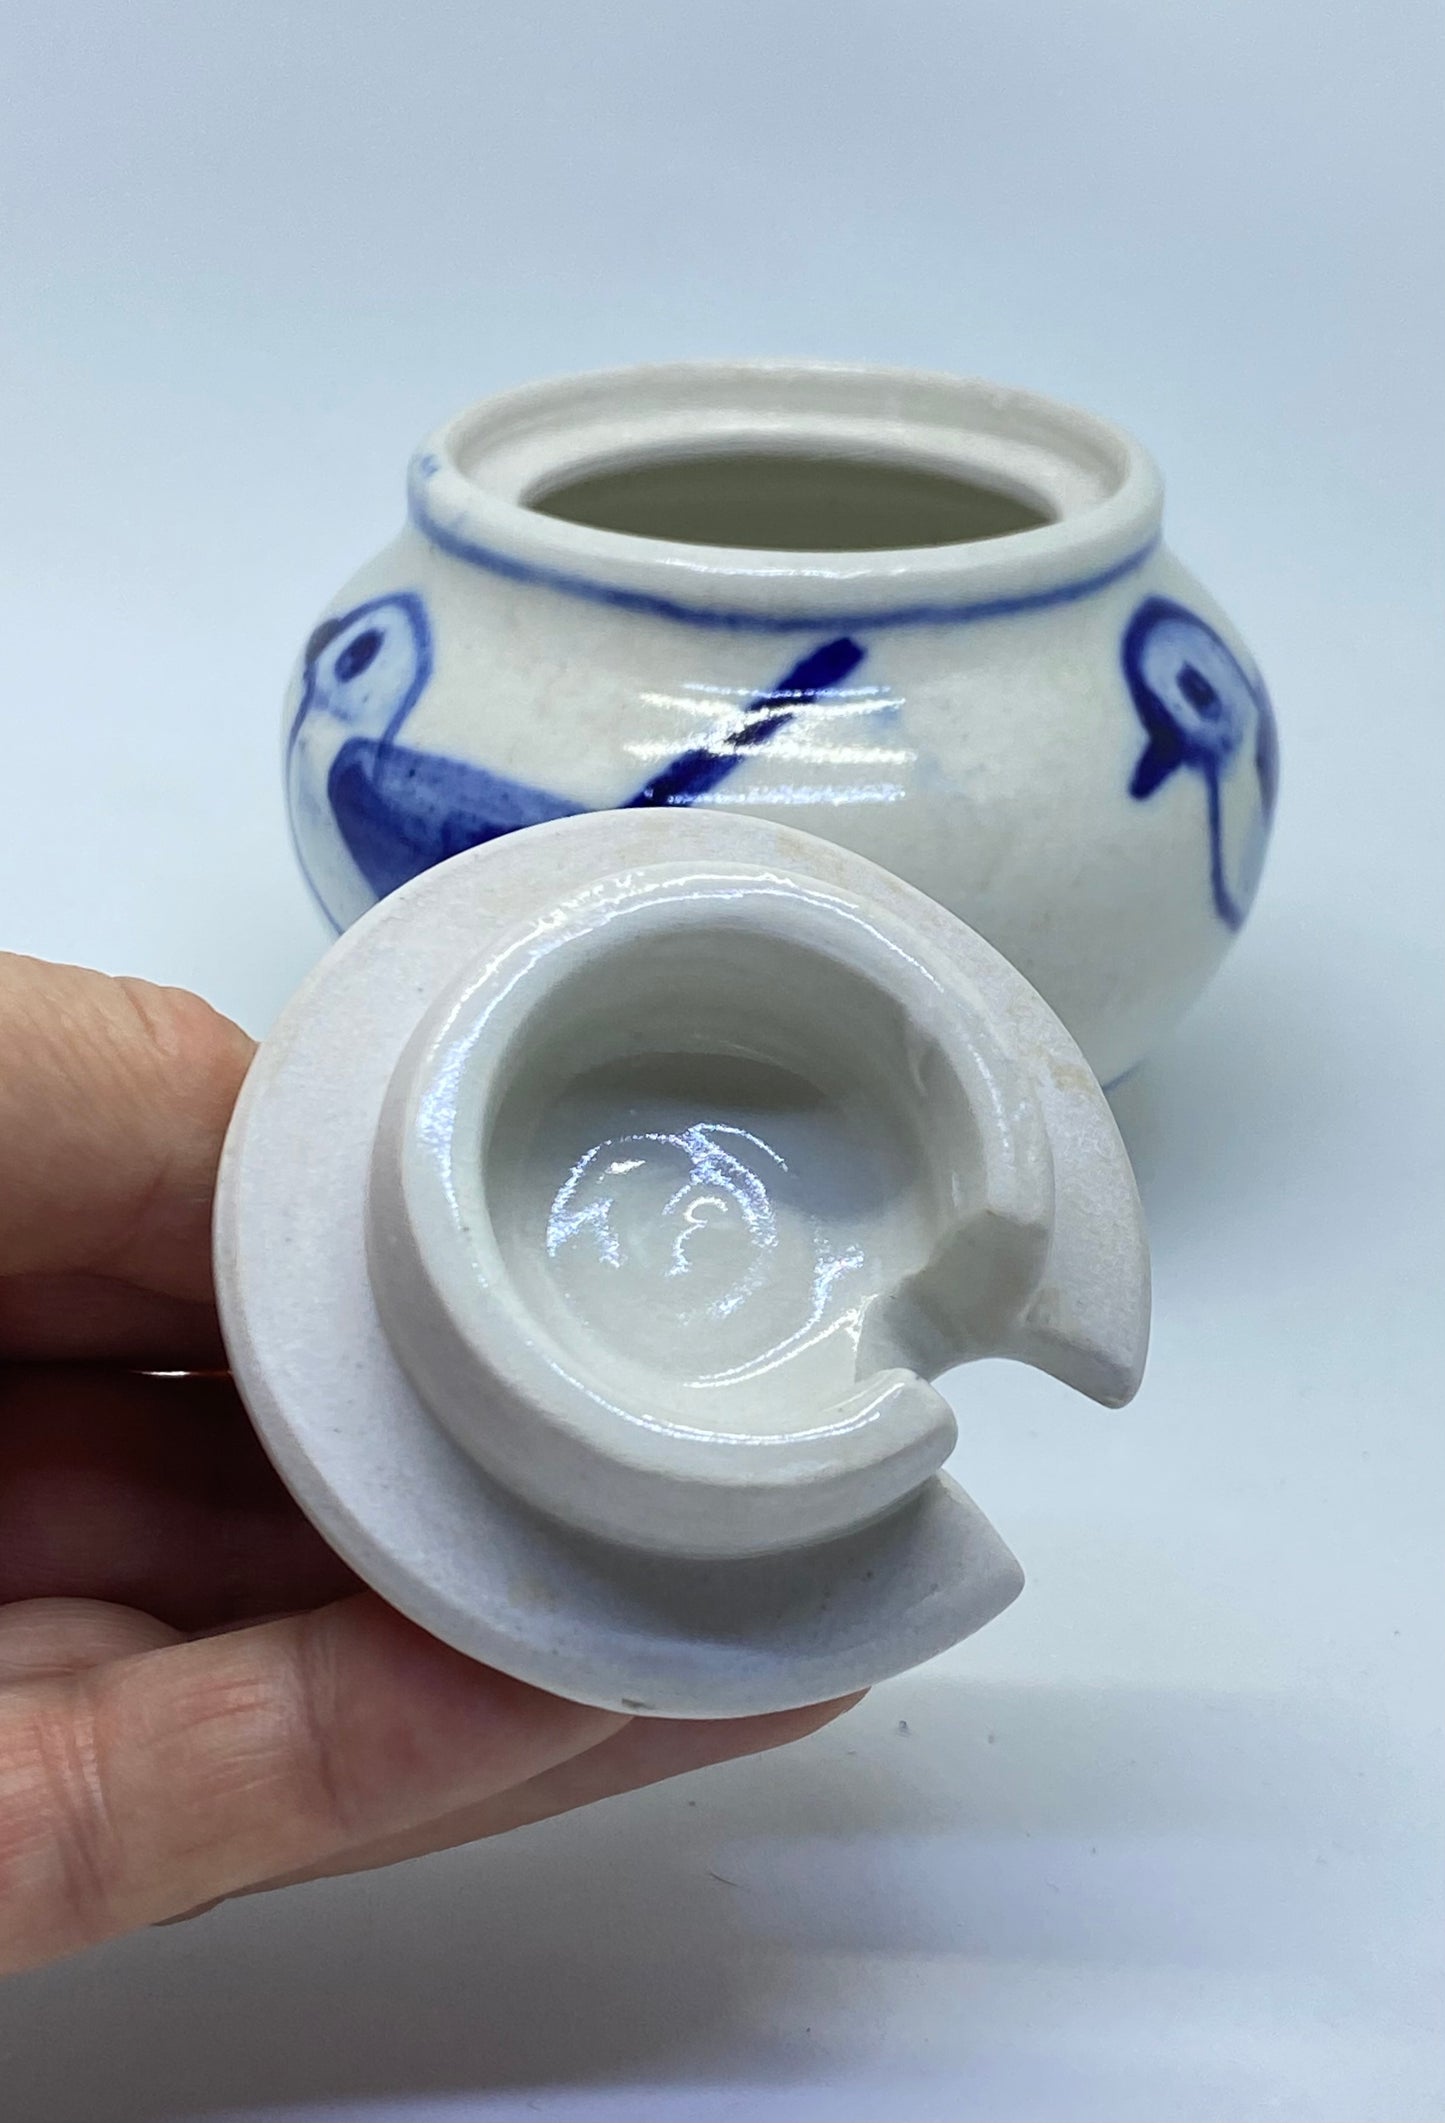 Eileen Brooker Tasmanian Pottery ‘Blue Wren’ Sugar Bowl with lid